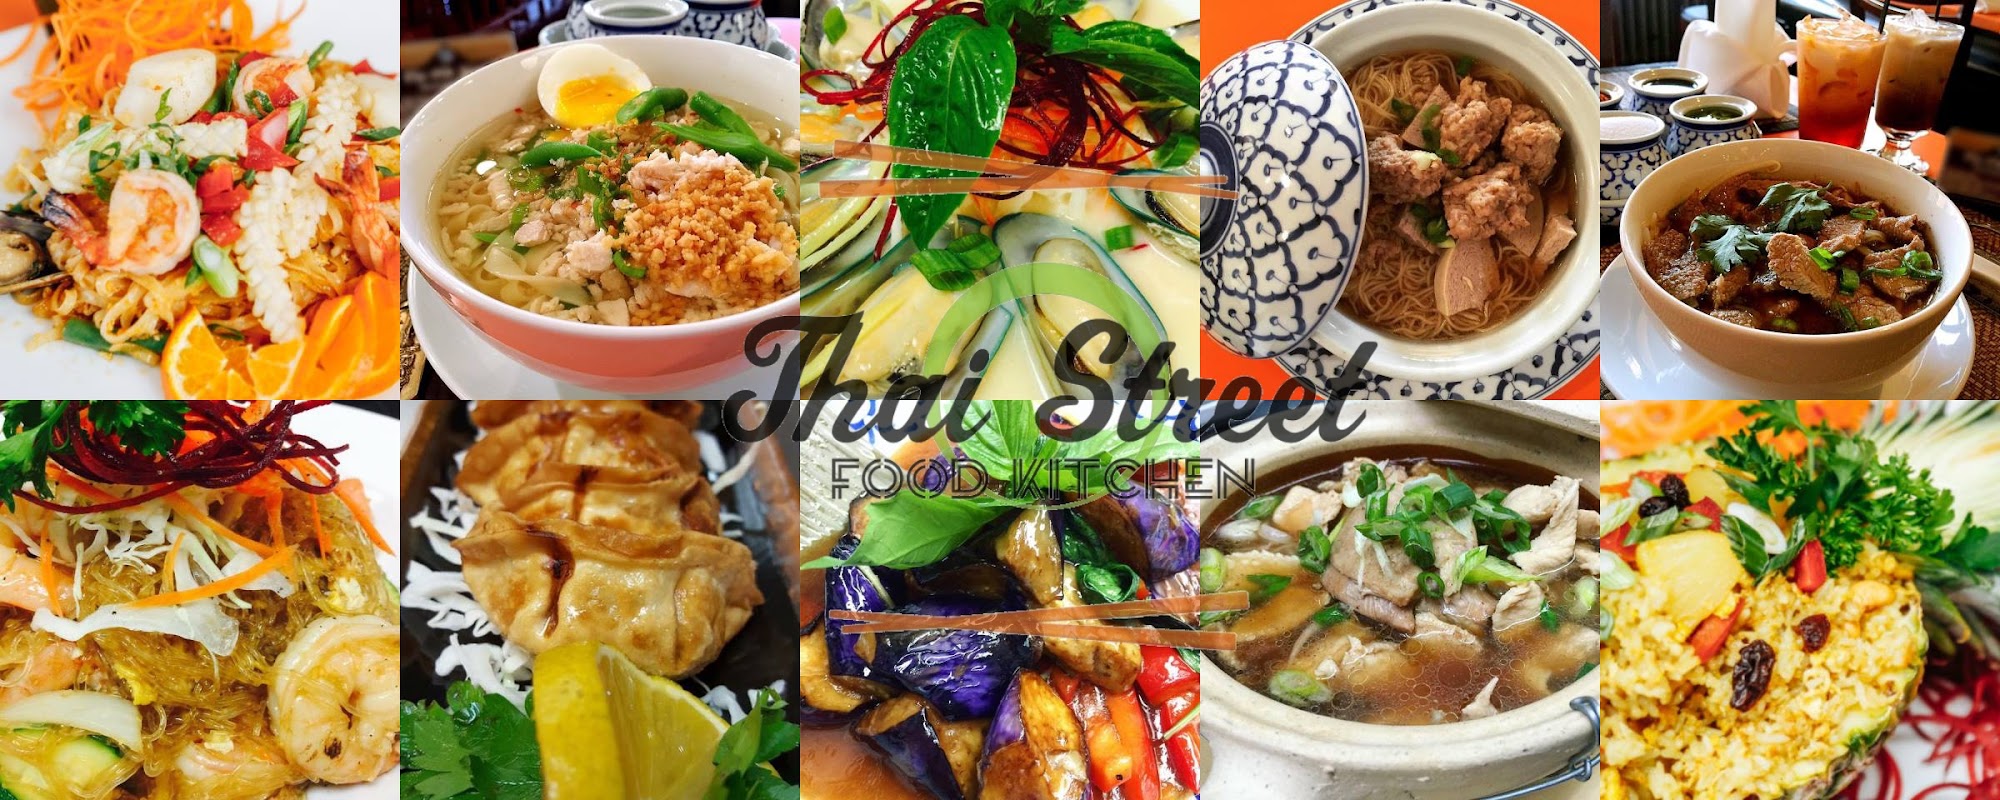 Thai Street Food Kitchen